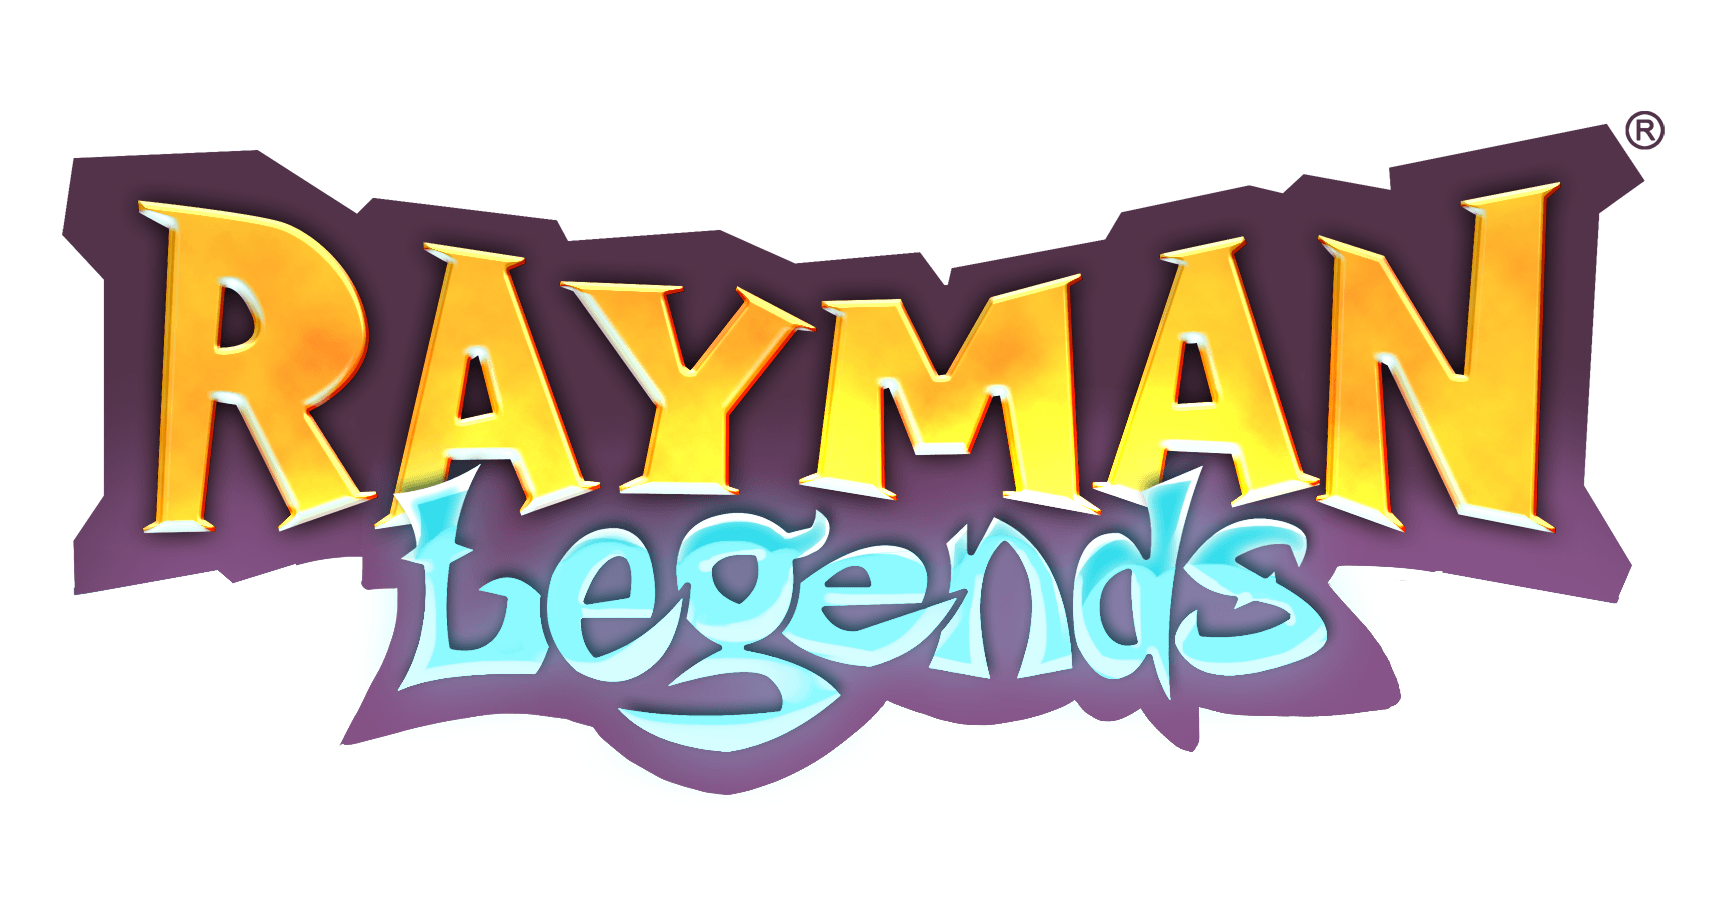 Rayman Logo - Design your own game logo. Rayman Legends | LOGO | Game logo, Game ...